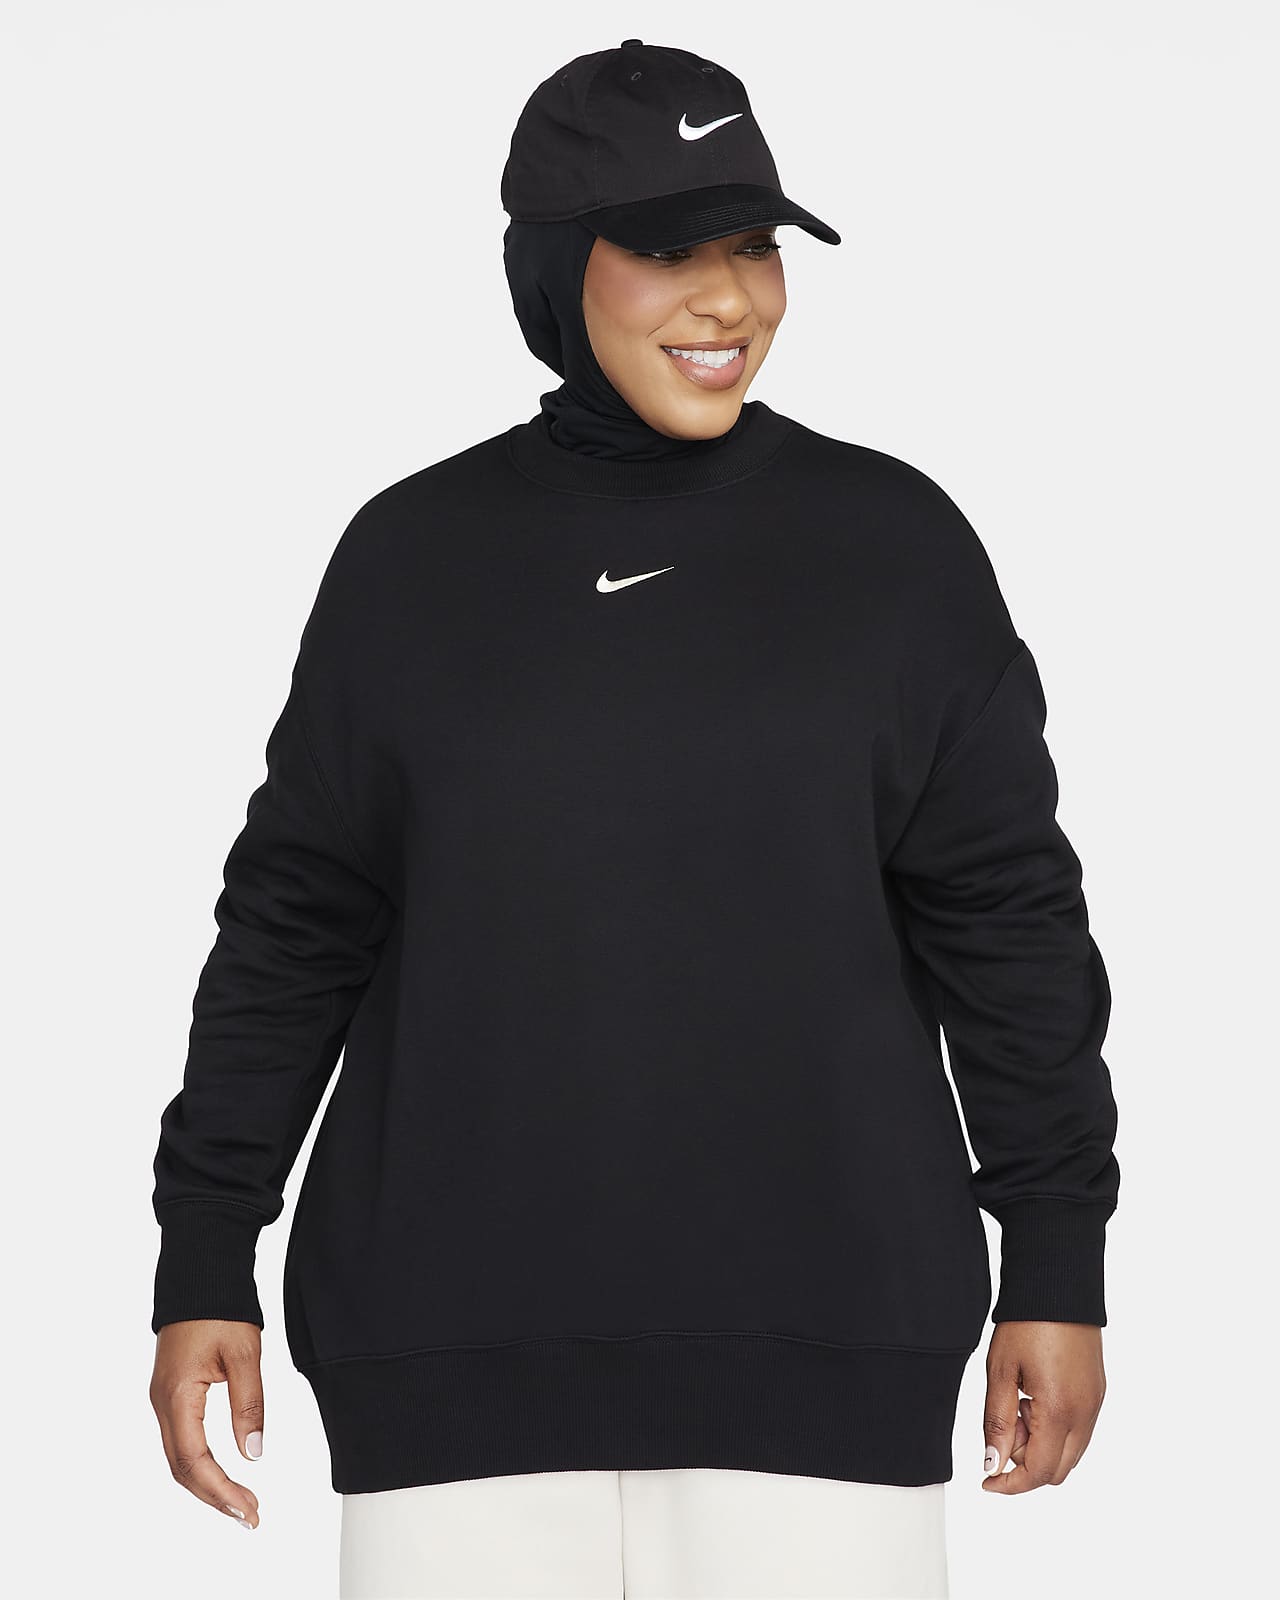 Sweat oversize à col ras-du-cou Nike Sportswear Phoenix Fleece pour Femme